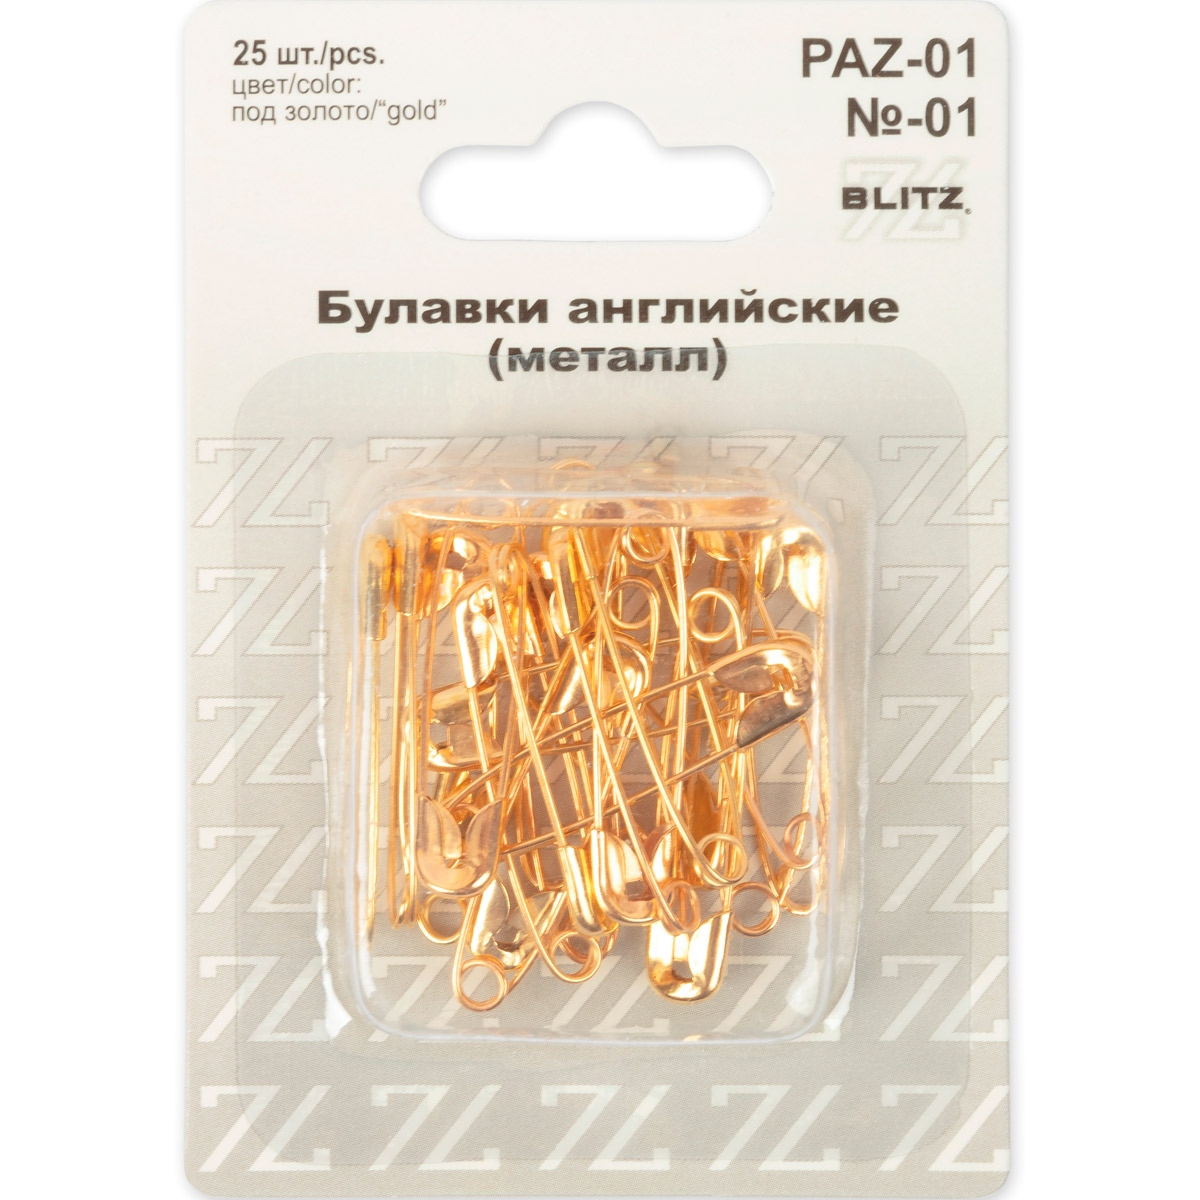 Булавки английские "BLITZ" №01 32 мм под золото железо в блистере 25 шт PAZ-01